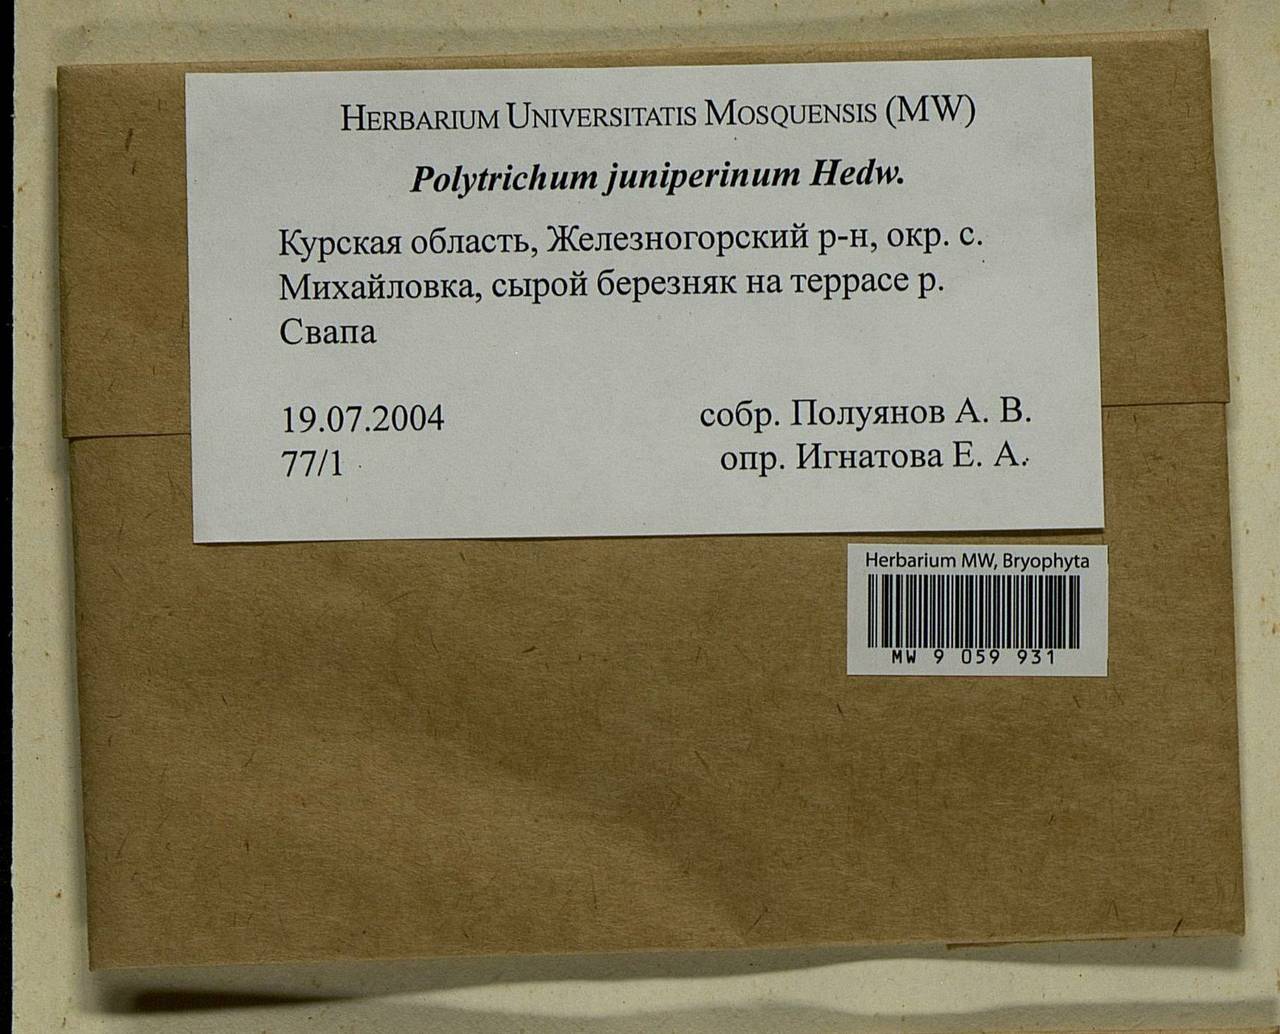 Polytrichum juniperinum Hedw., Bryophytes, Bryophytes - Central forest-and-steppe region (B10) (Russia)